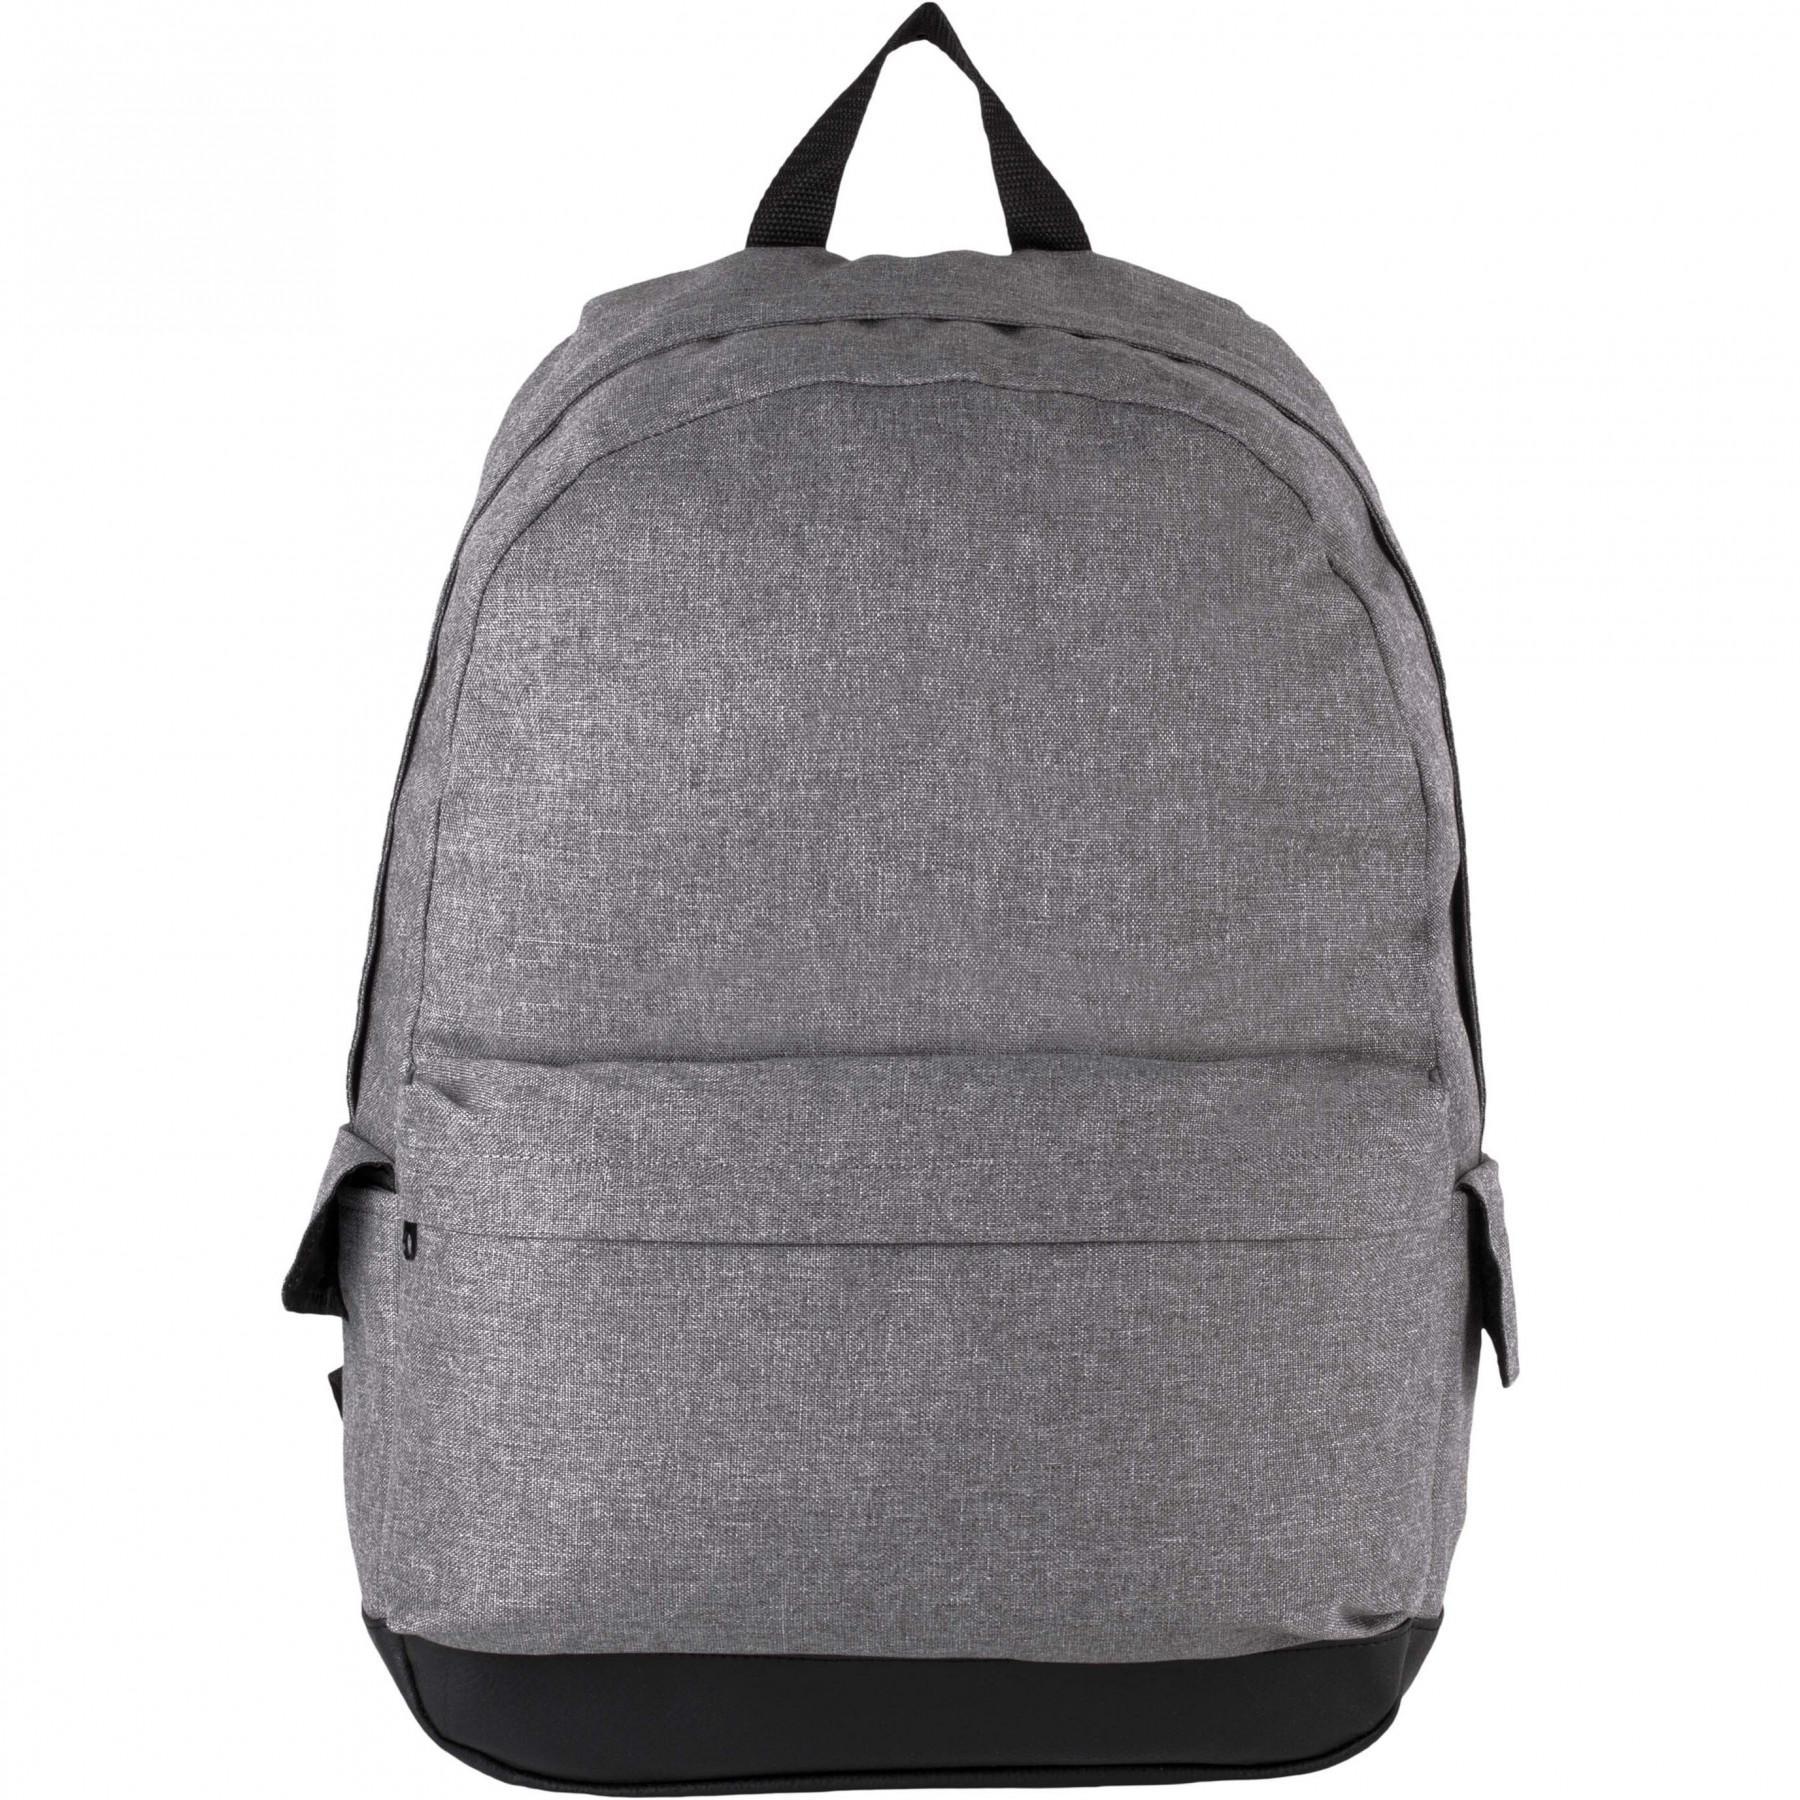 Backpack Kimood polyester